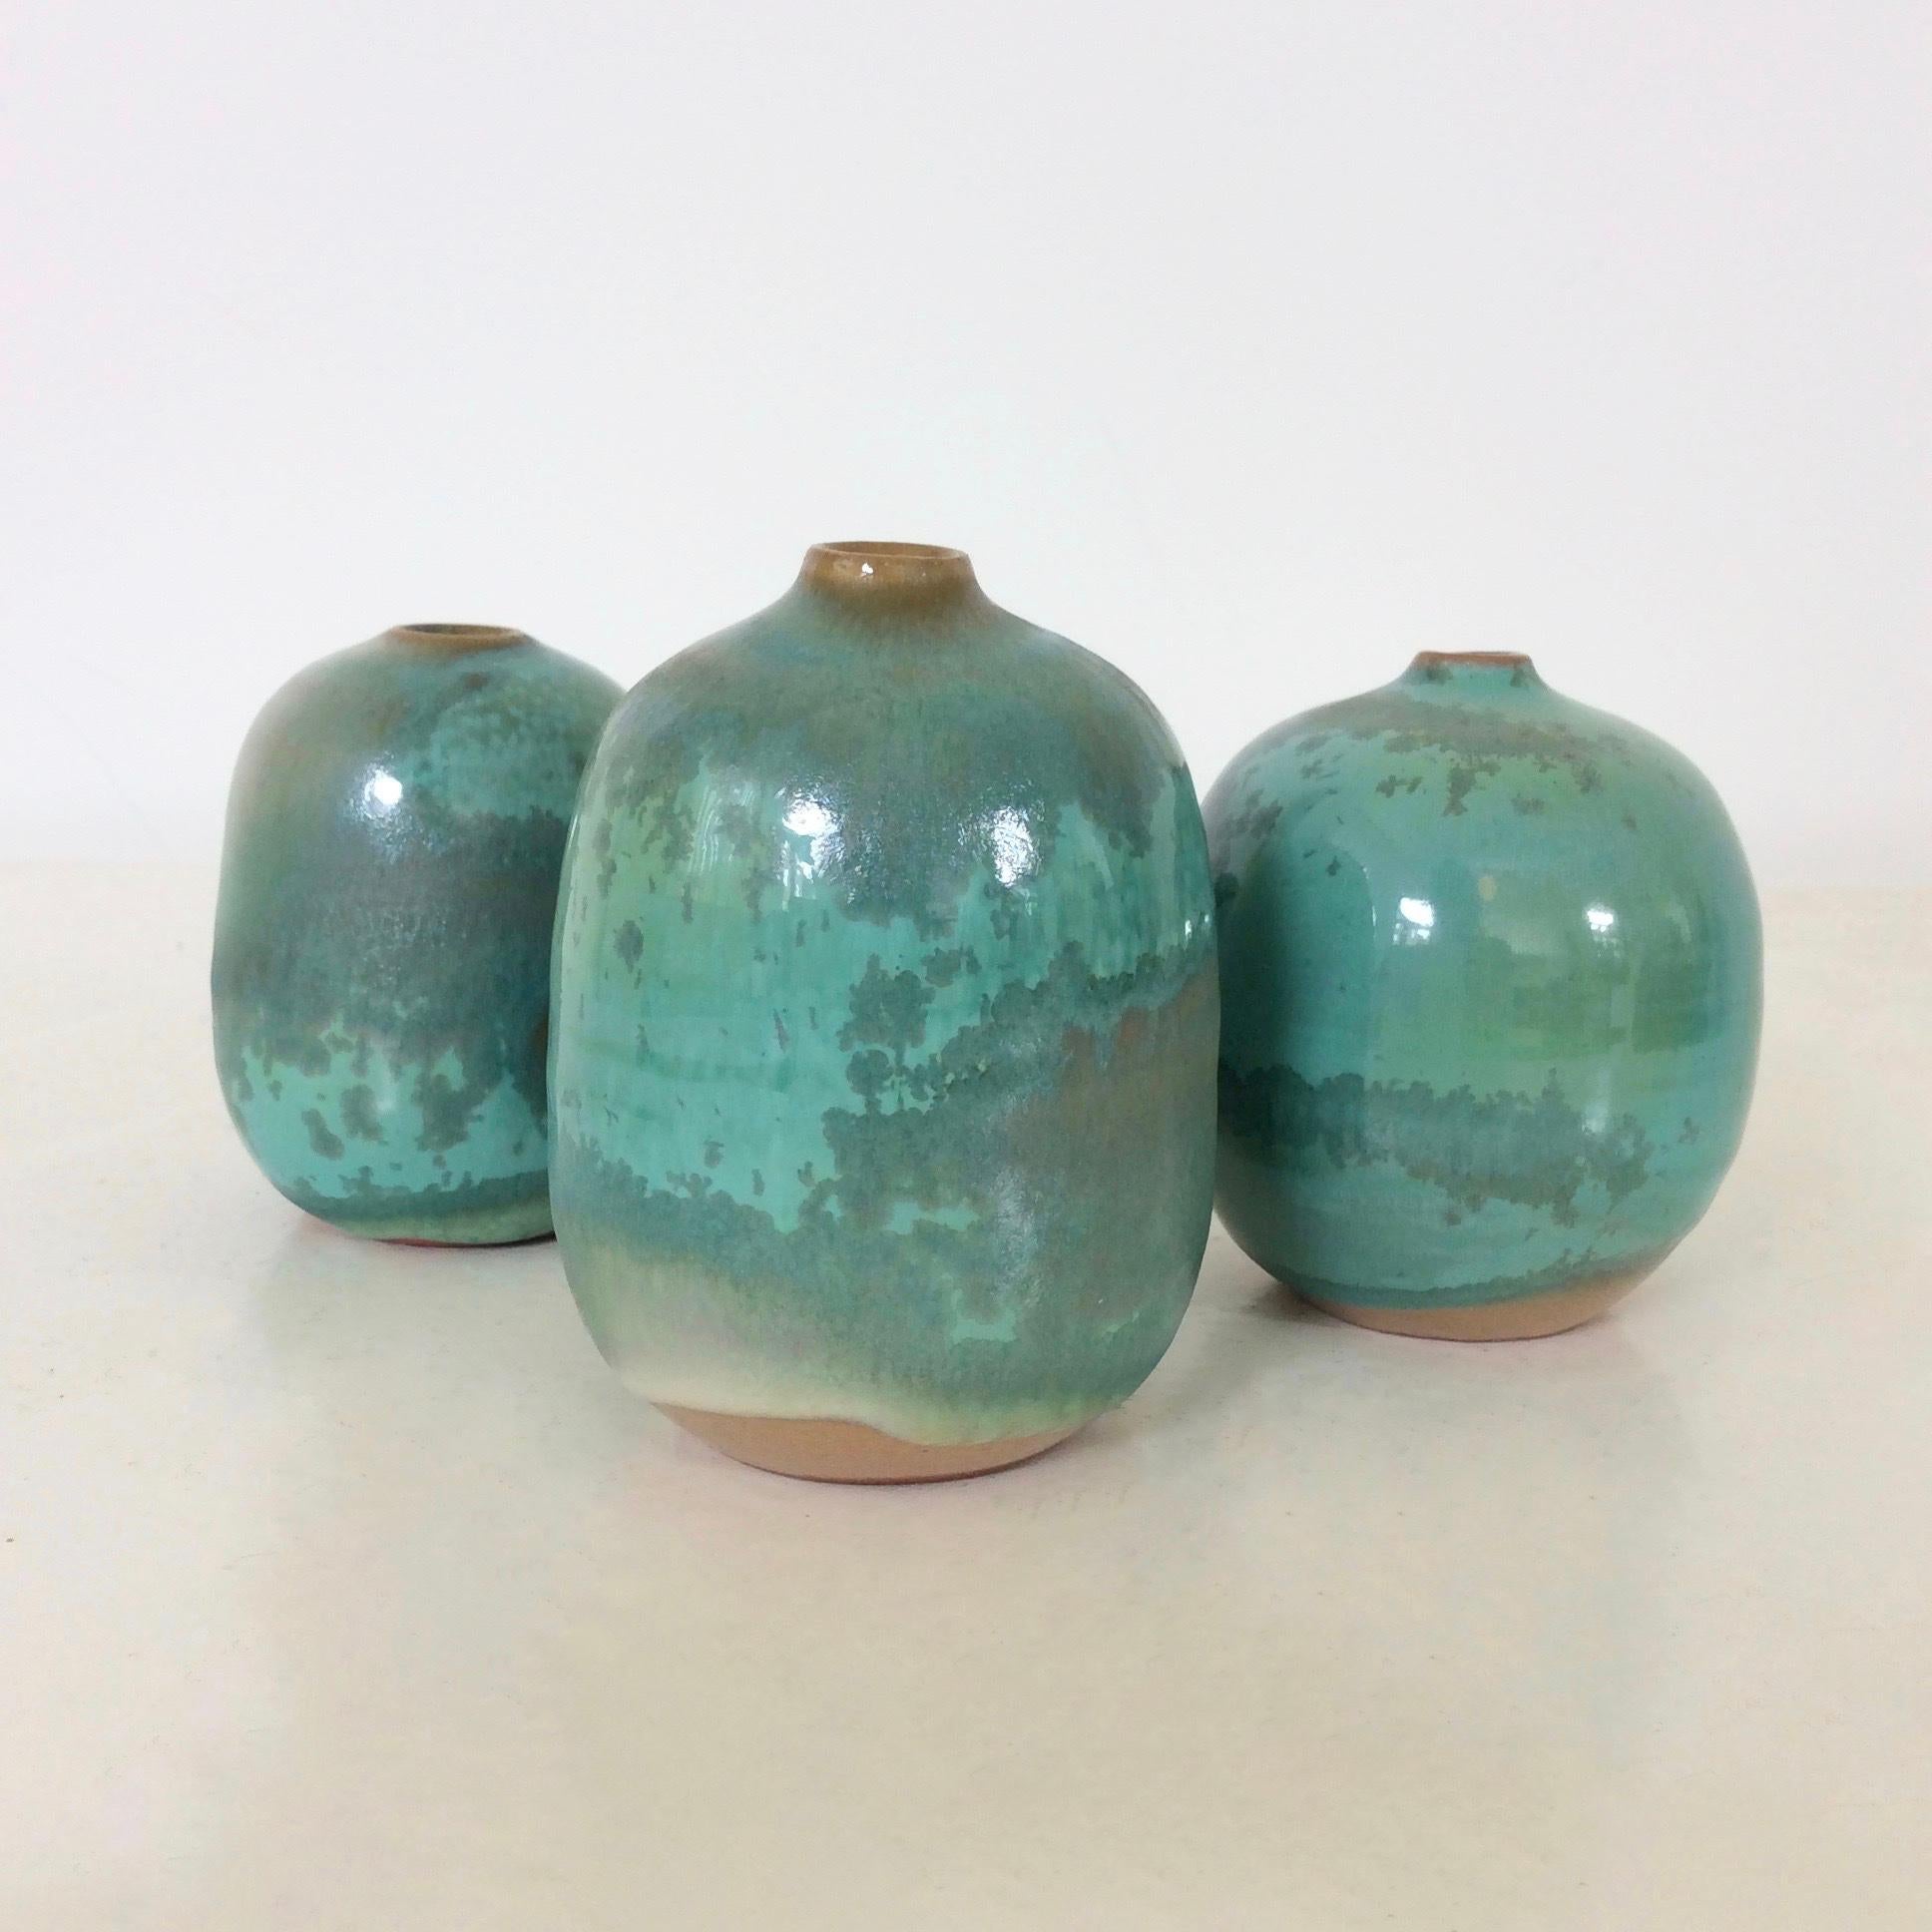 Nice set of three vases by Antonio Lampecco, Belgium, circa1980.
Green glazed ceramic, signed underside.
Dimensions: 7 cm Height, diameter 5 cm.
Good condition.